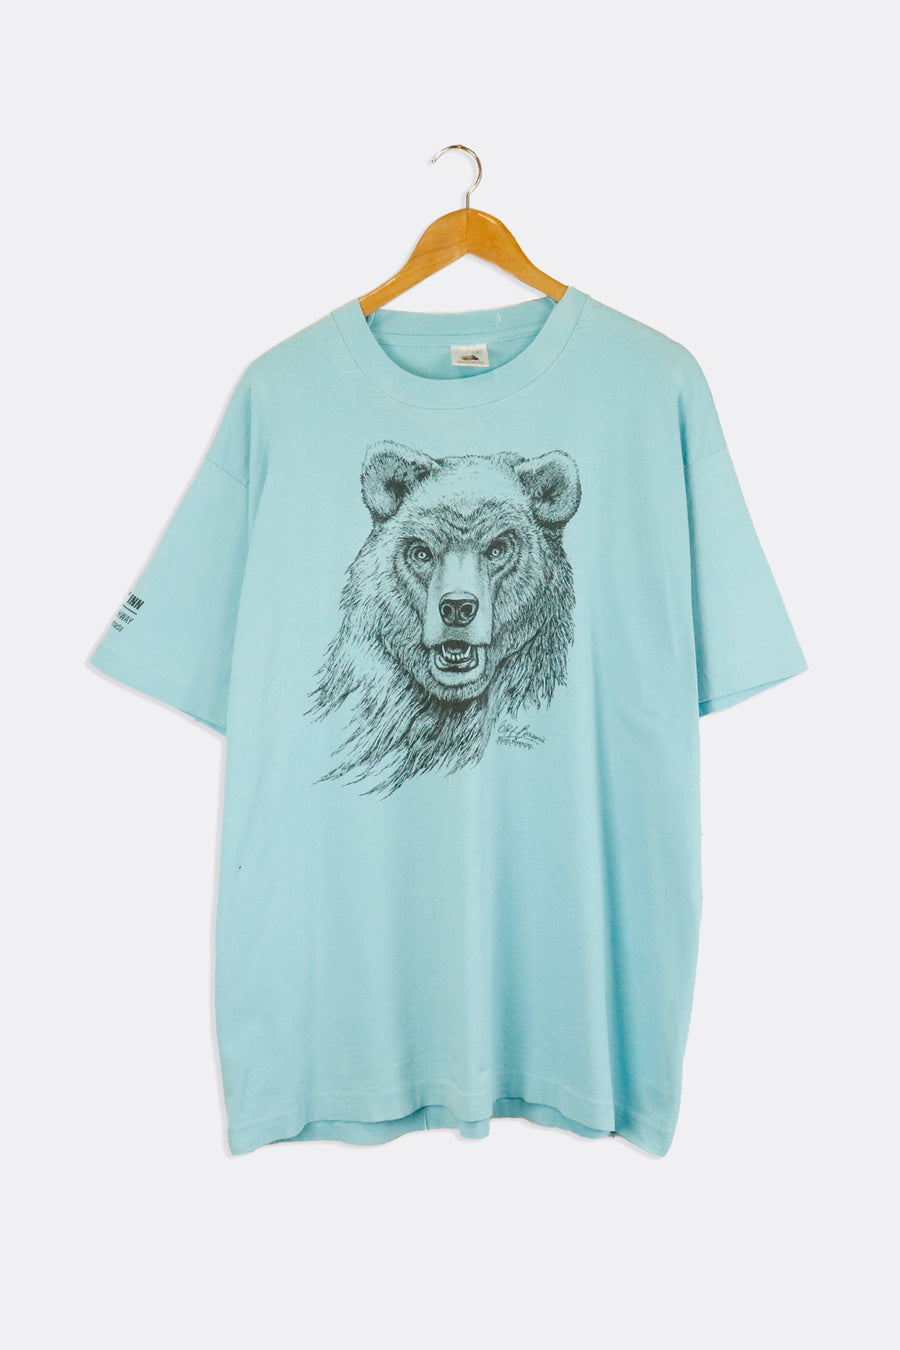 Vintage Grizzly Bear Sketch Style Graphic Head Portrait T Shirt Sz XL